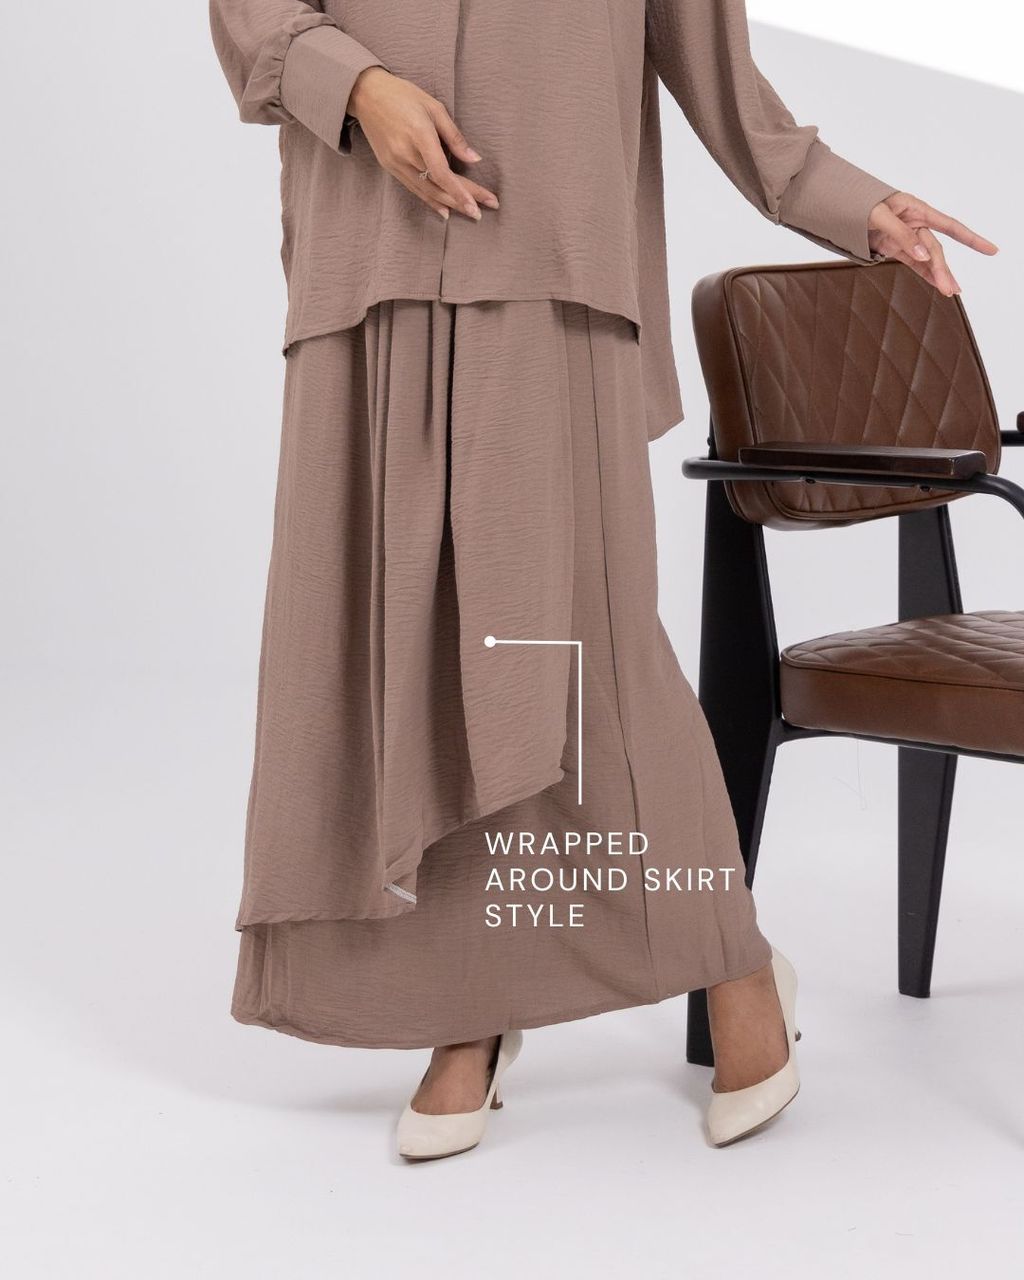 haura-wear-cotton-baju-muslimah-set-seluar-set-skirt-suit-muslimah-set-baju-dan-seluar-muslimah-palazzo